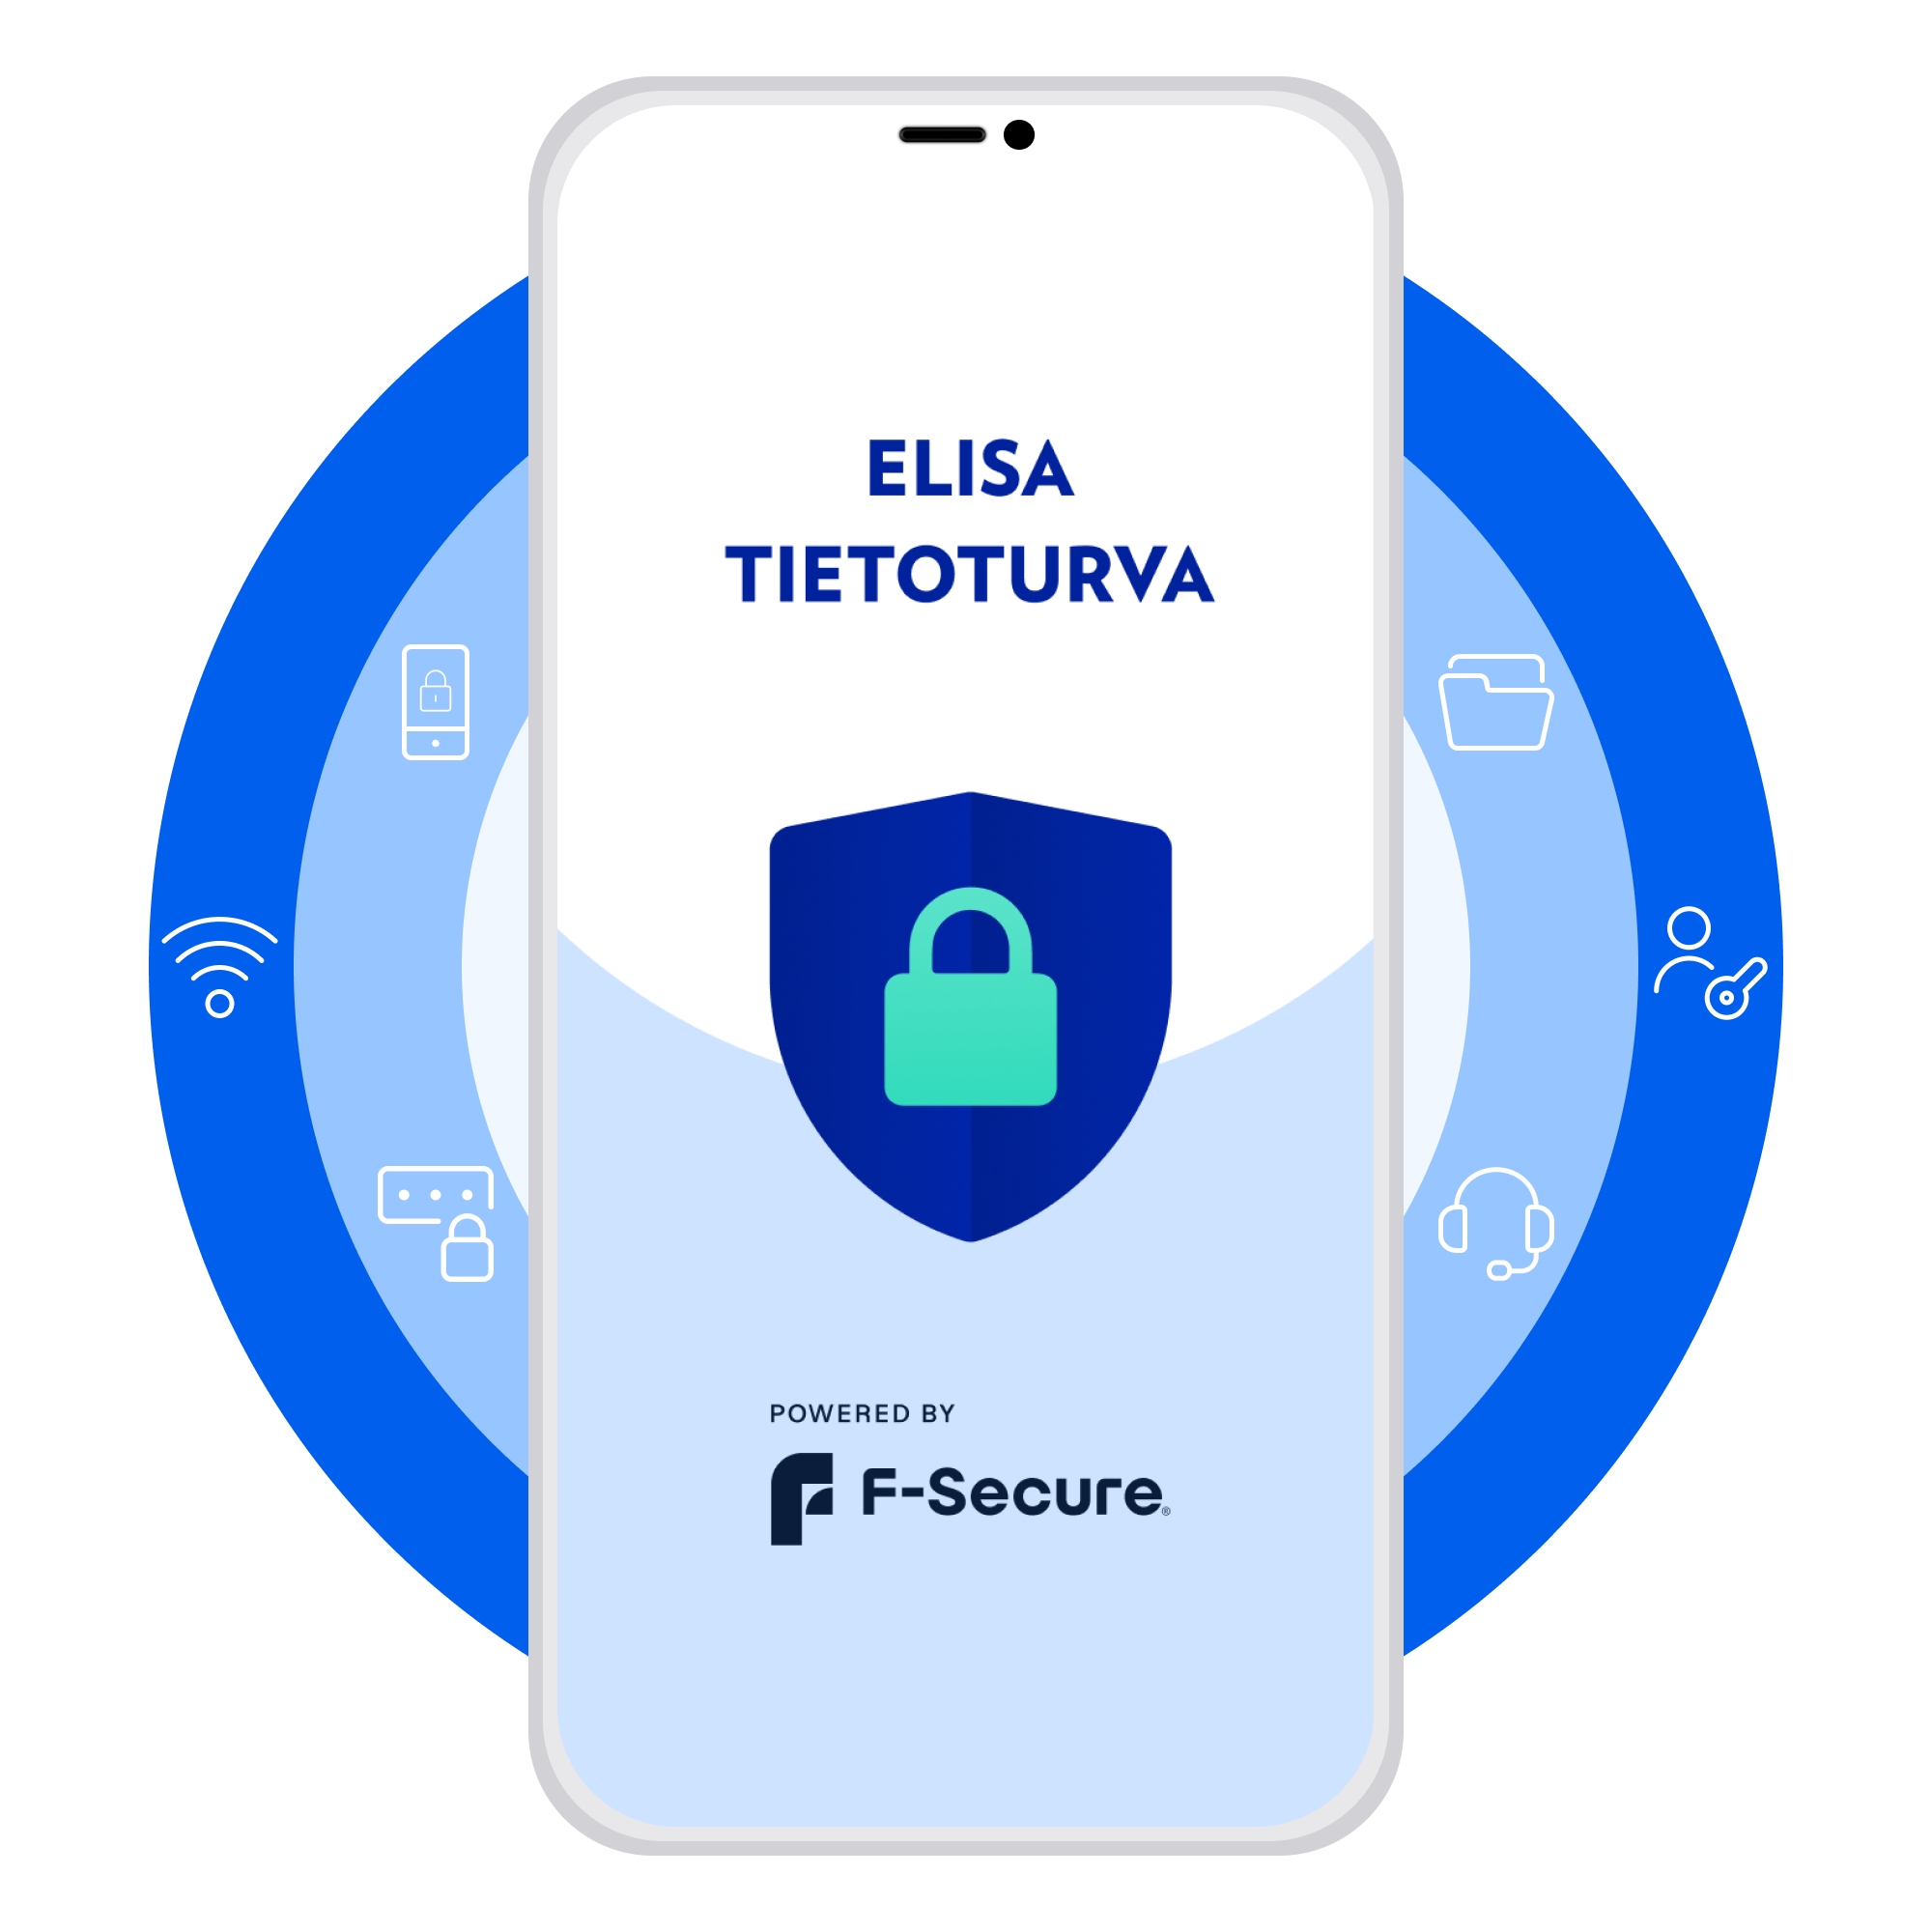 Elisa Tietoturva Powered by F-Secure